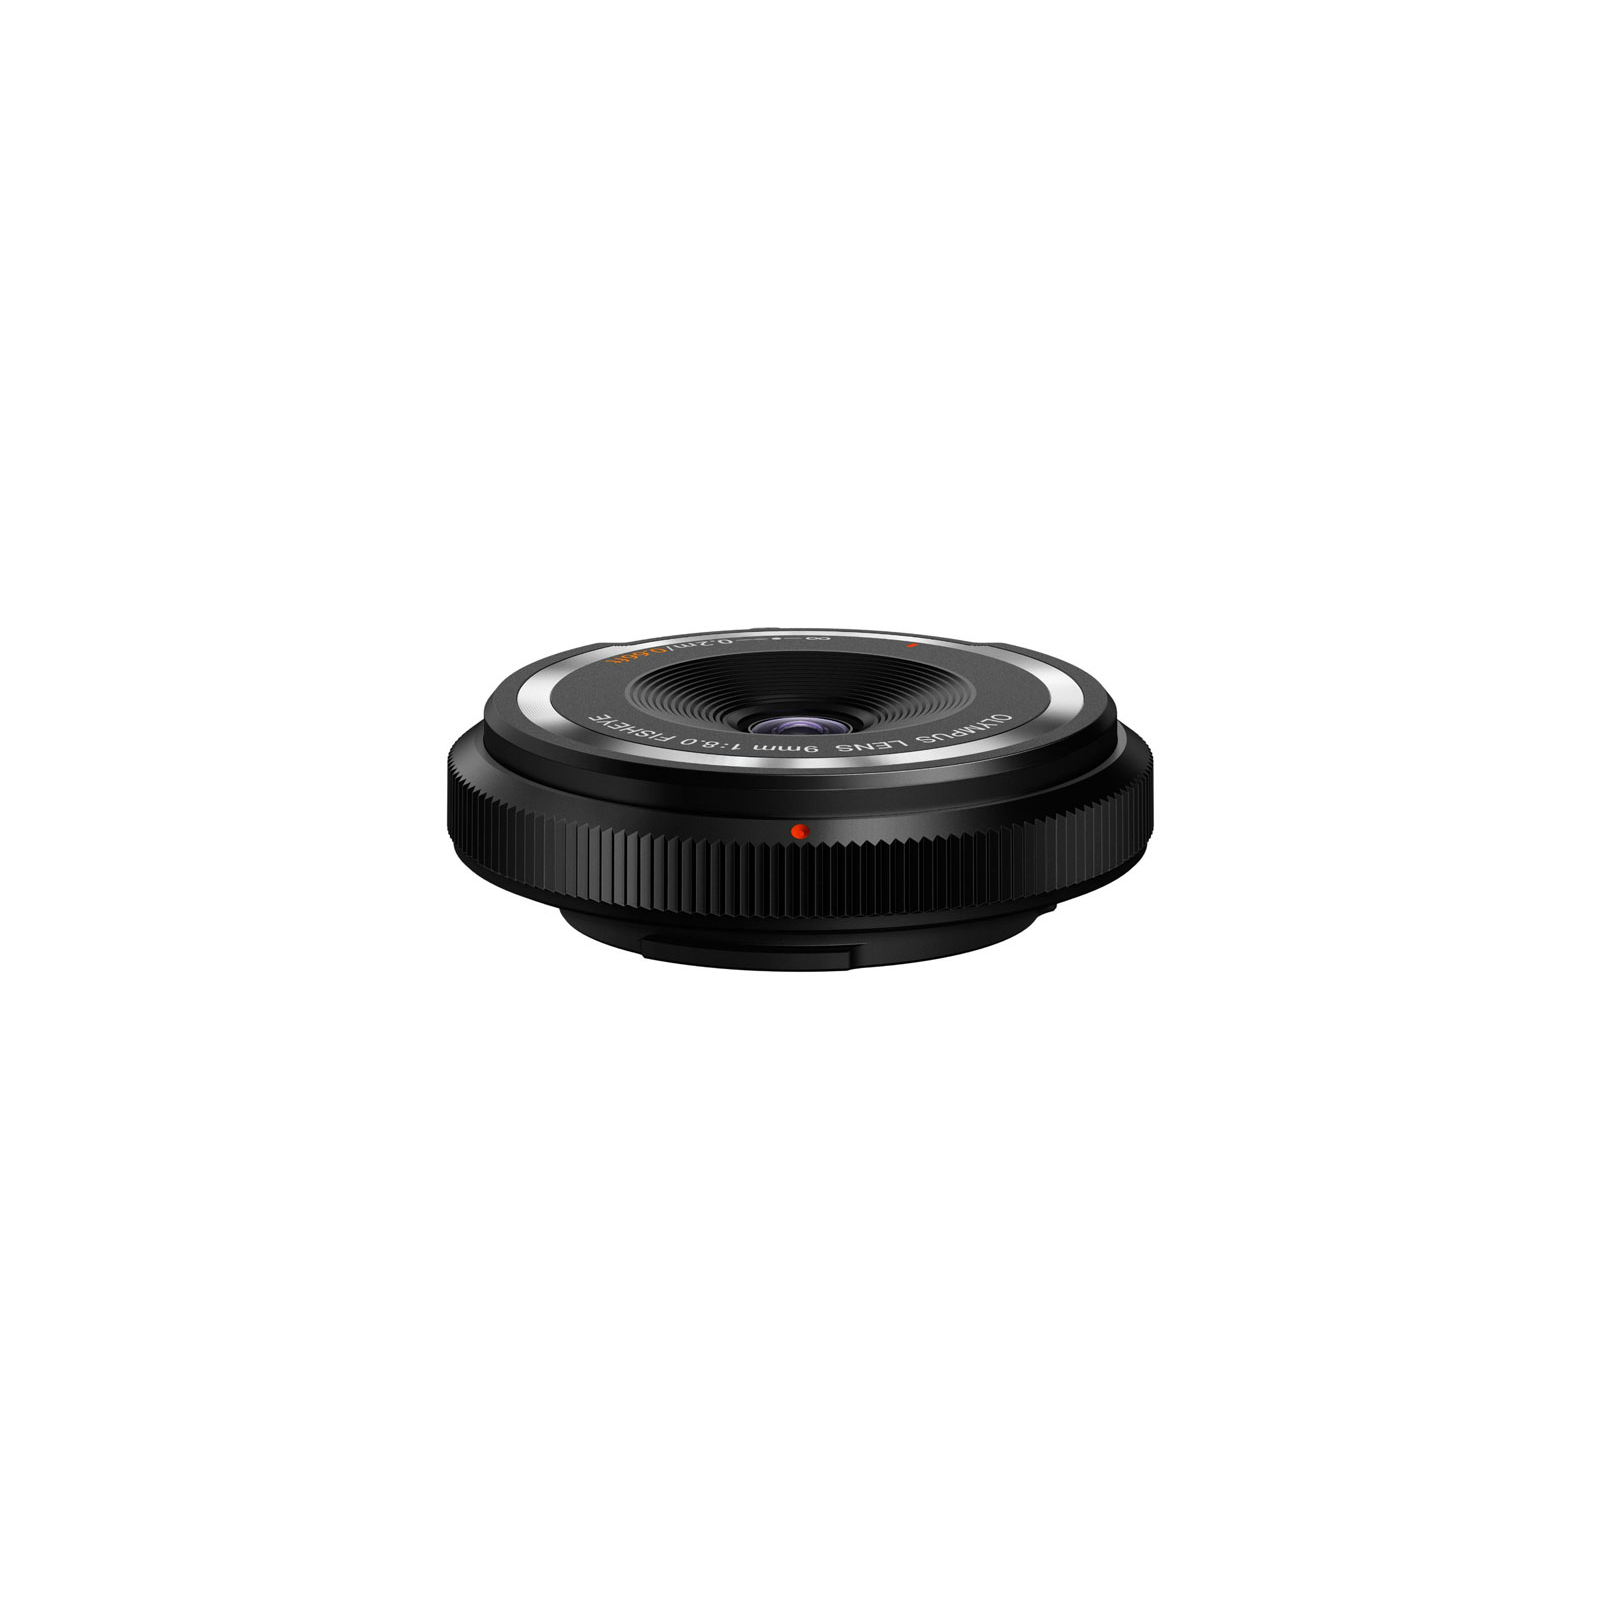 Об'єктив Olympus BCL-0980 Fish-Eye Body Cap Lens 9mm 1:8.0 Black (V325040BW000) зображення 3